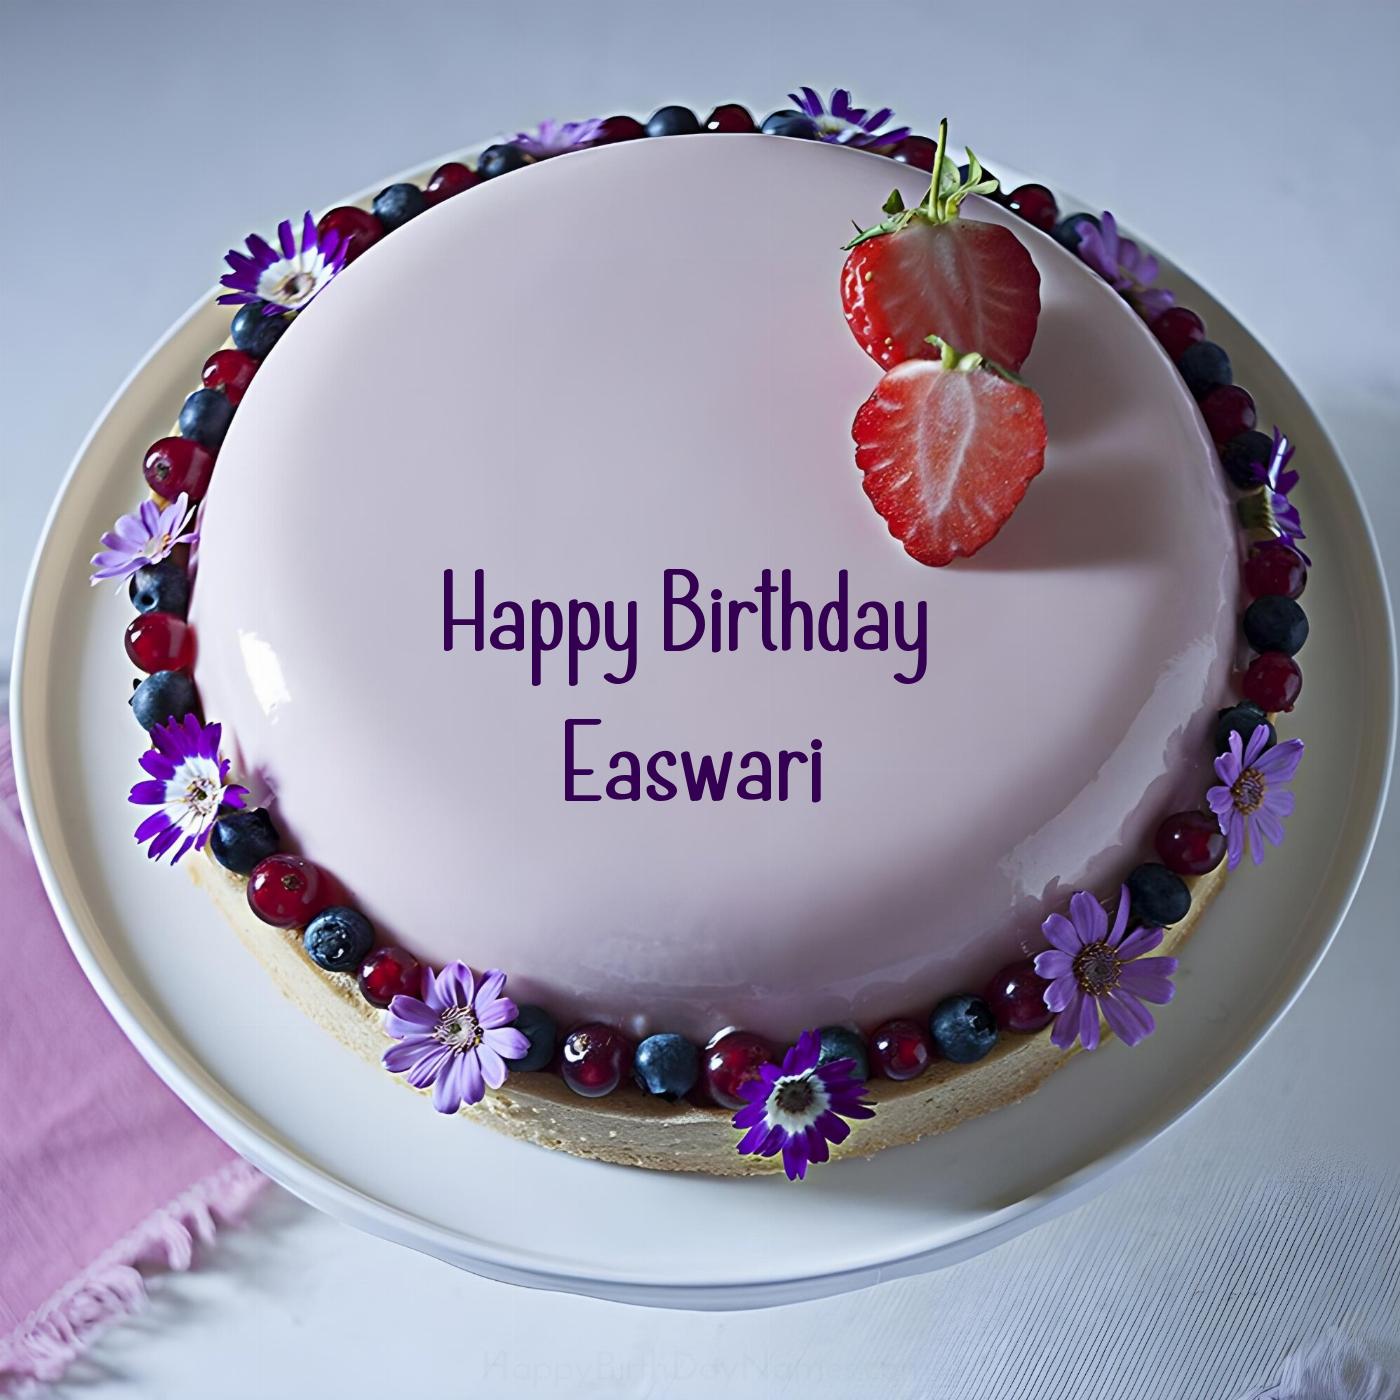 Happy Birthday Easwari Strawberry Flowers Cake